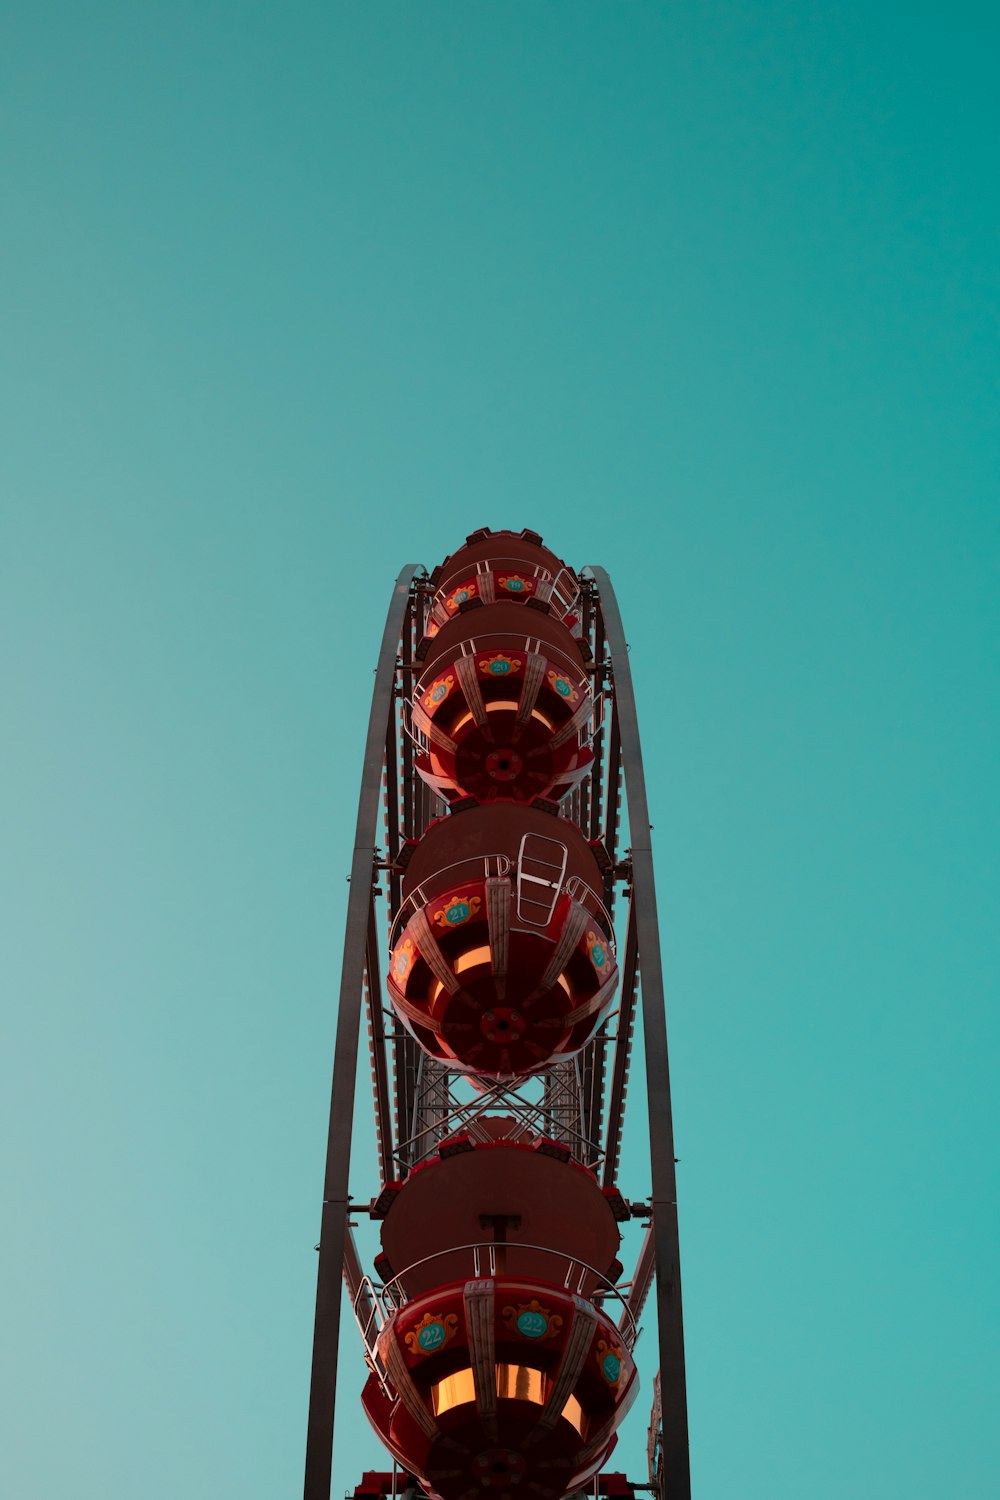 a red ferris wheel against a blue sky